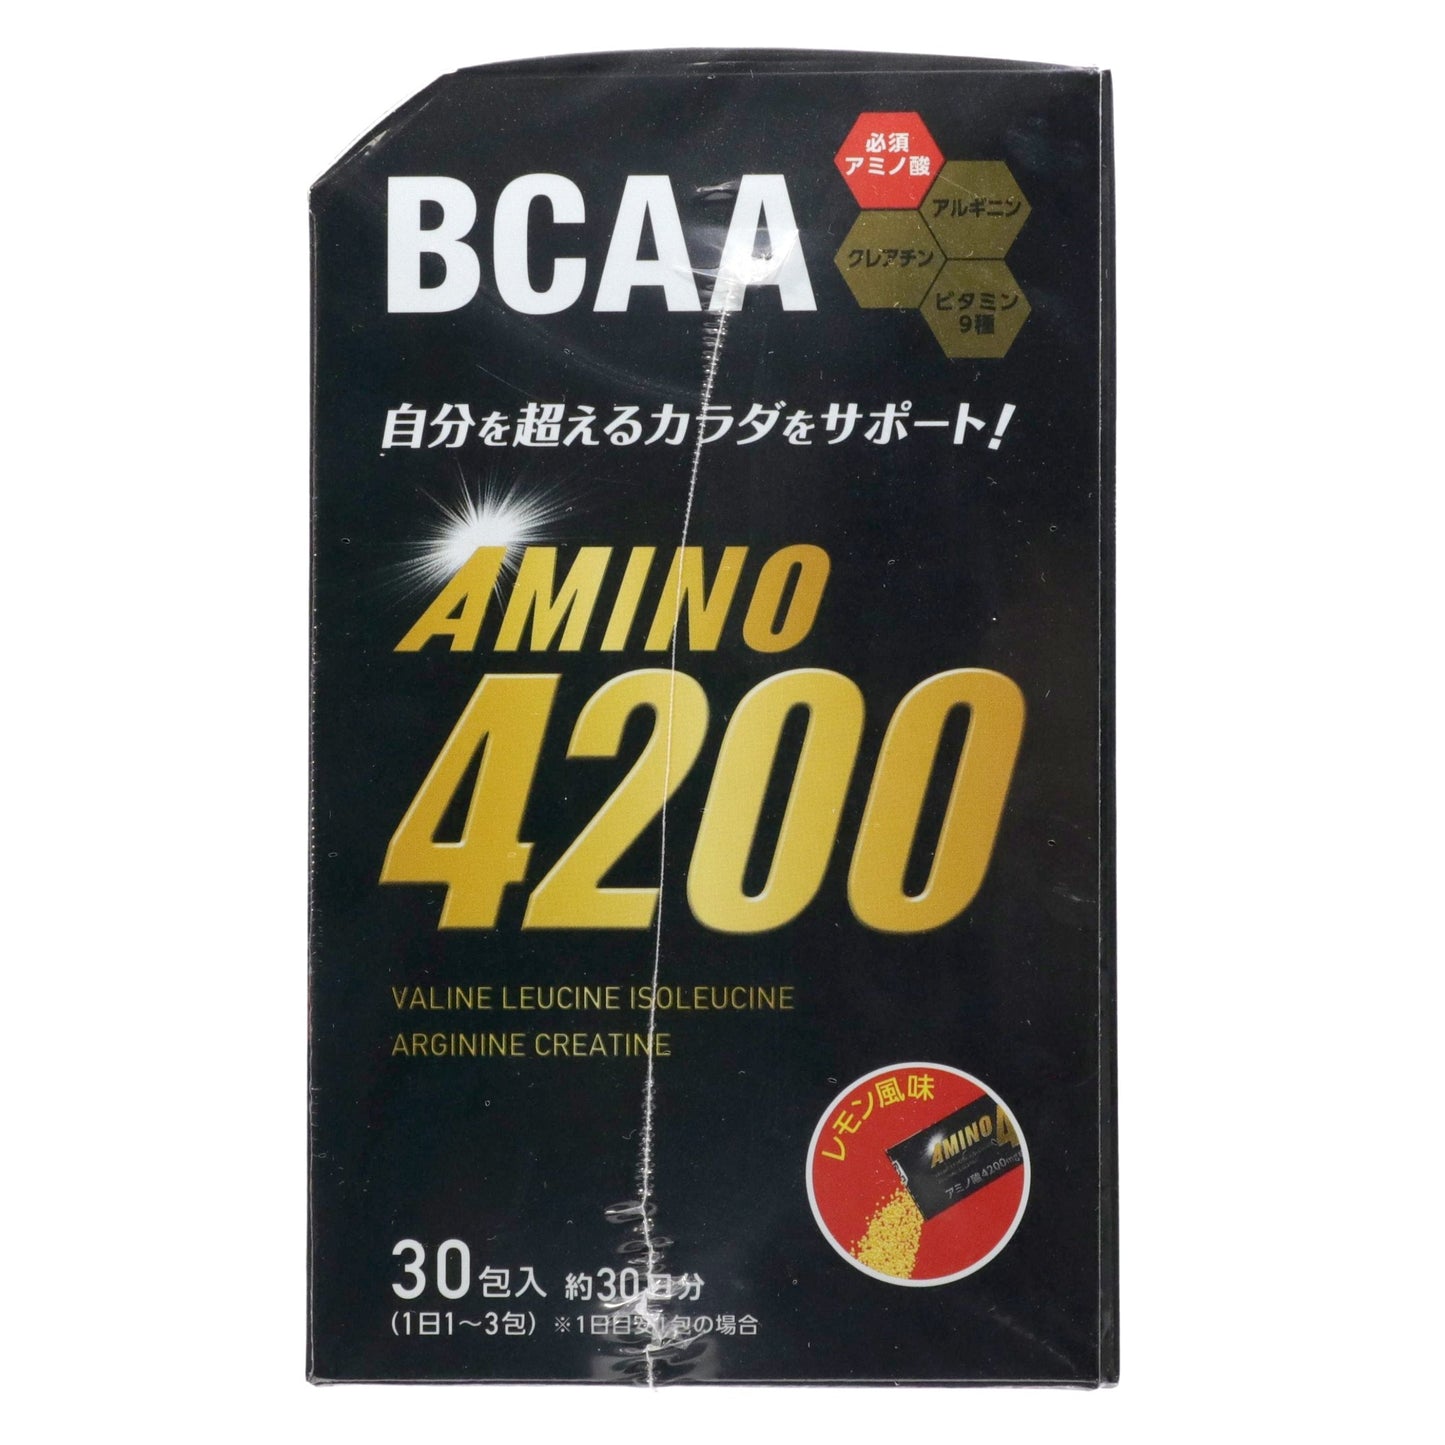 【S-SELECT】Amino 胺基酸 4200 30 包